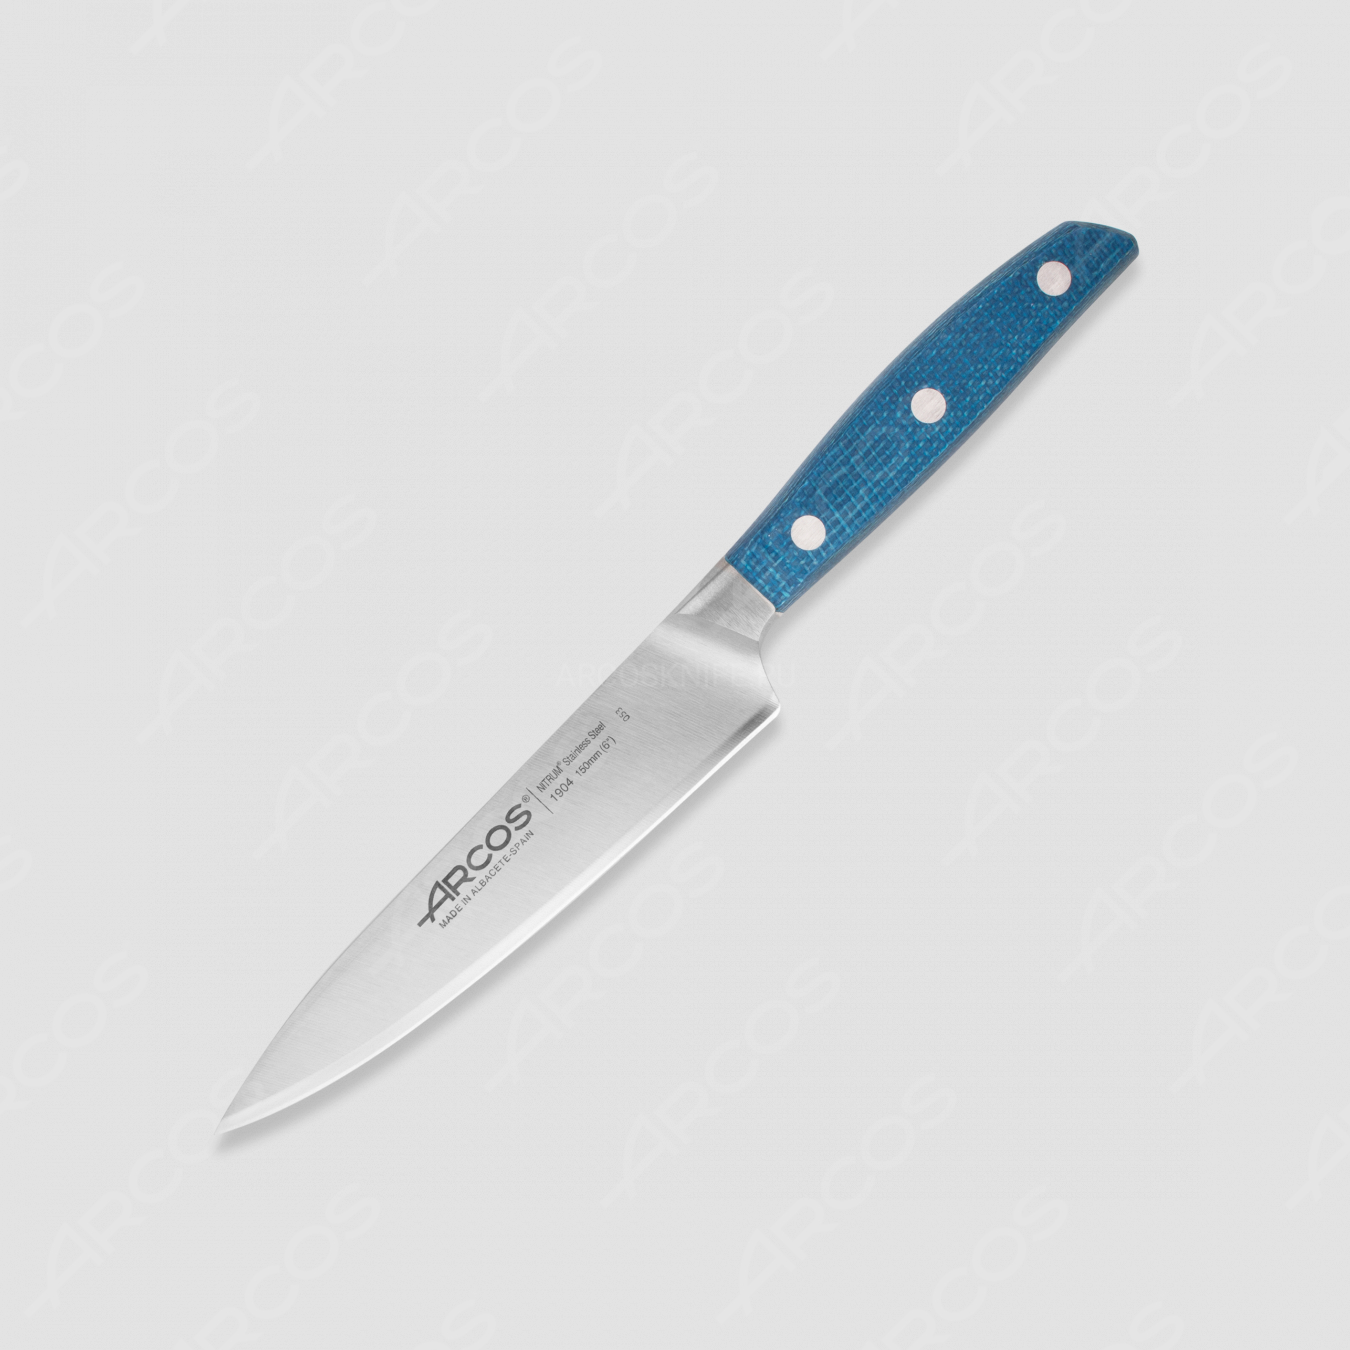 Нож кухонный для нарезки 15 см, серия Brooklyn, ARCOS, Испания